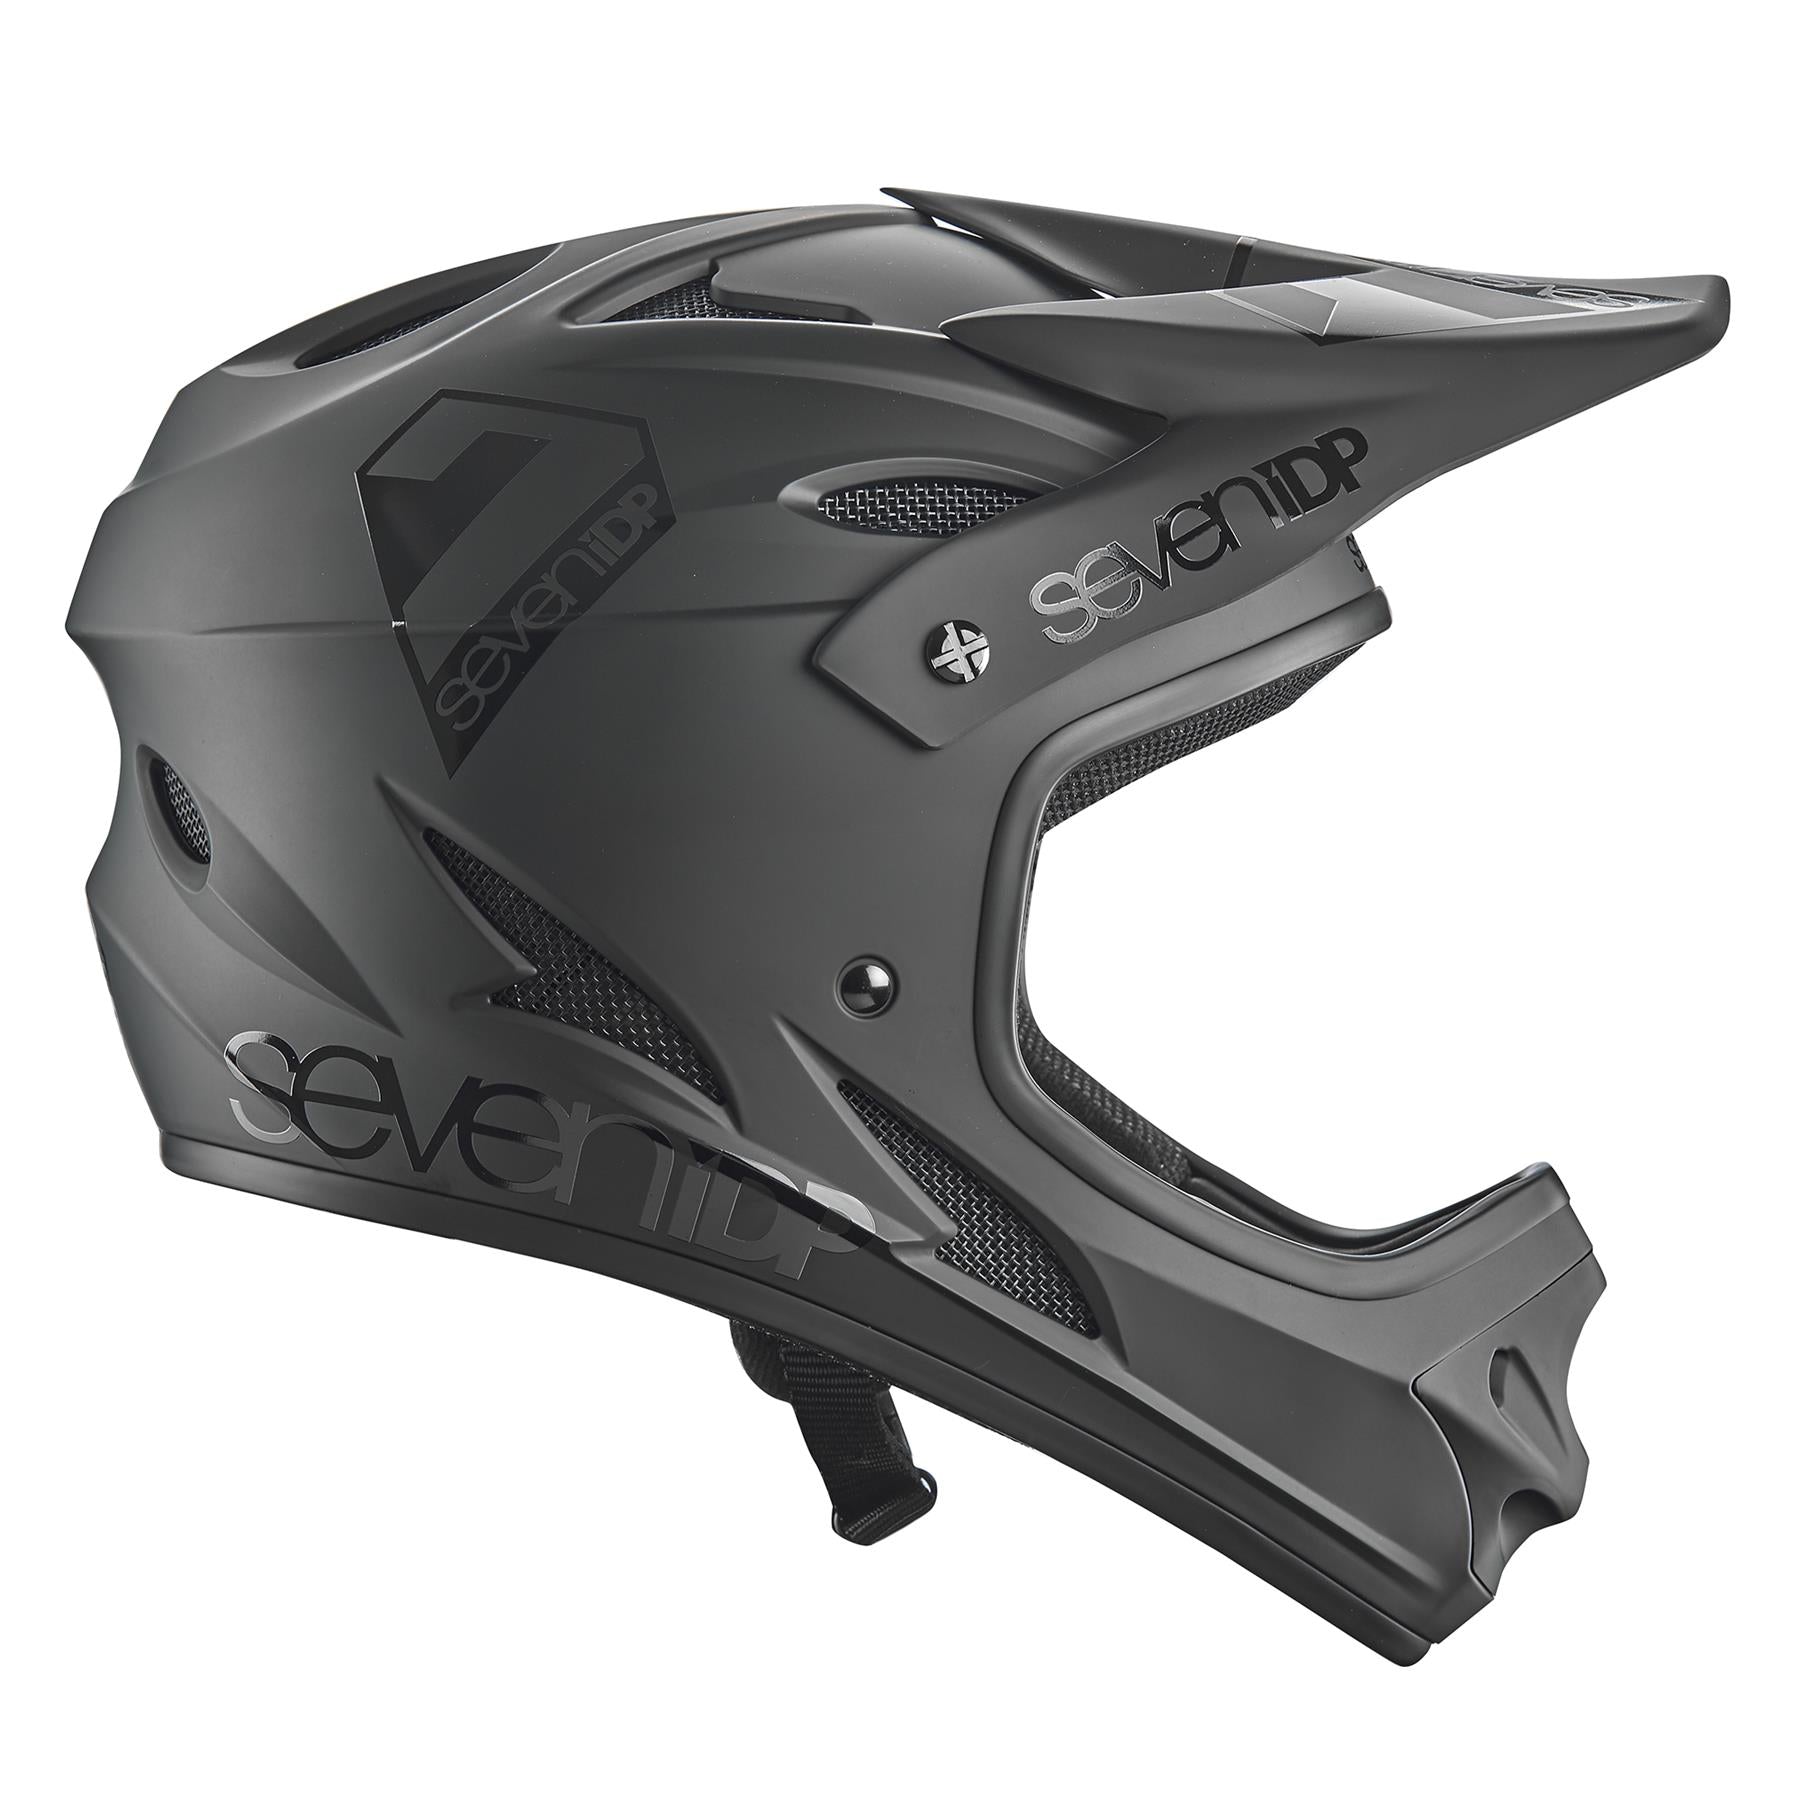 Seven iDP M1 Race Helmet - Matt Black/Gloss Black